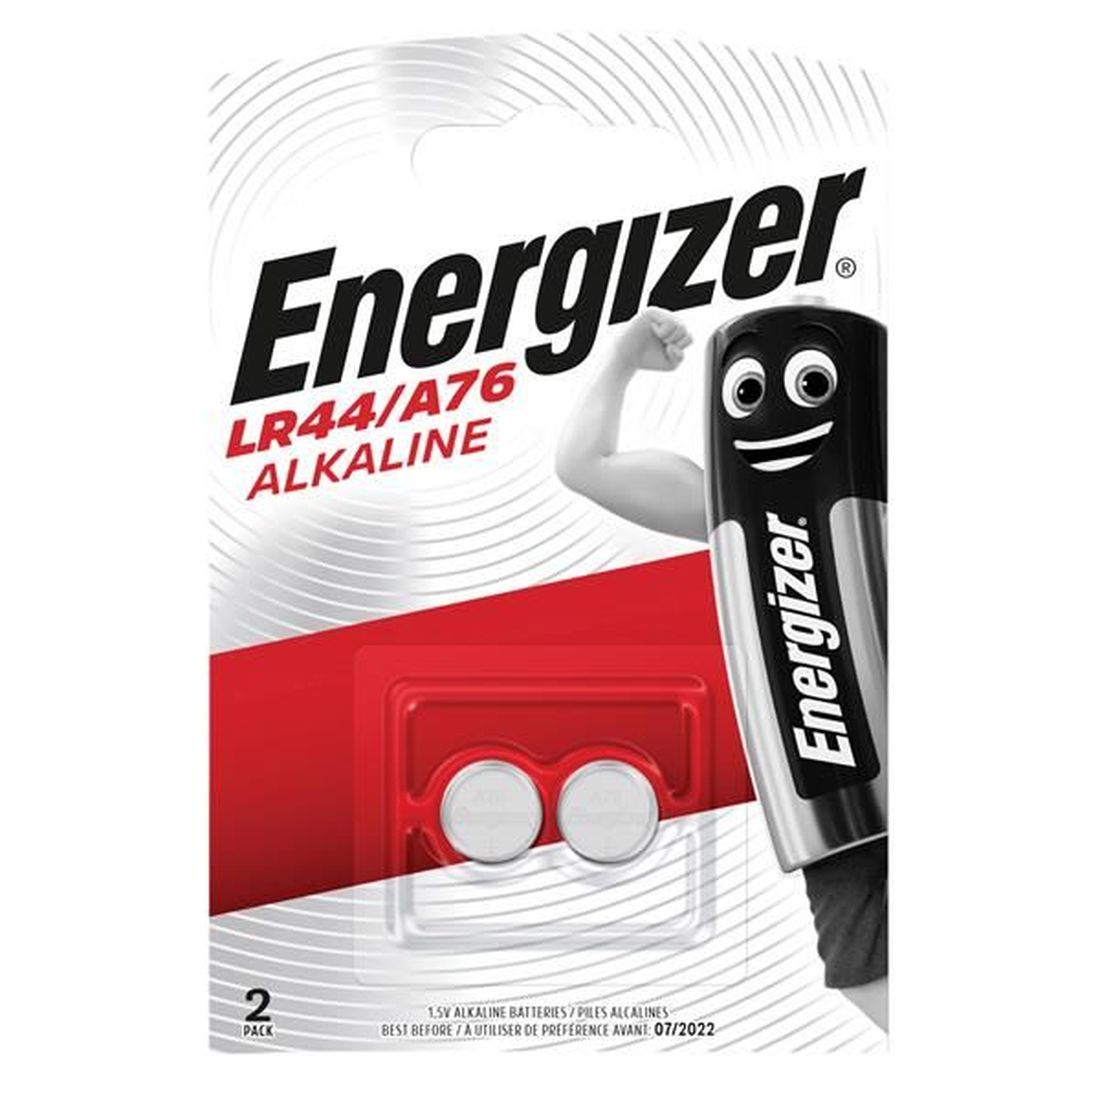 Energizer LR44 Button Cell Alkaline Battery (Pack 2)                                      